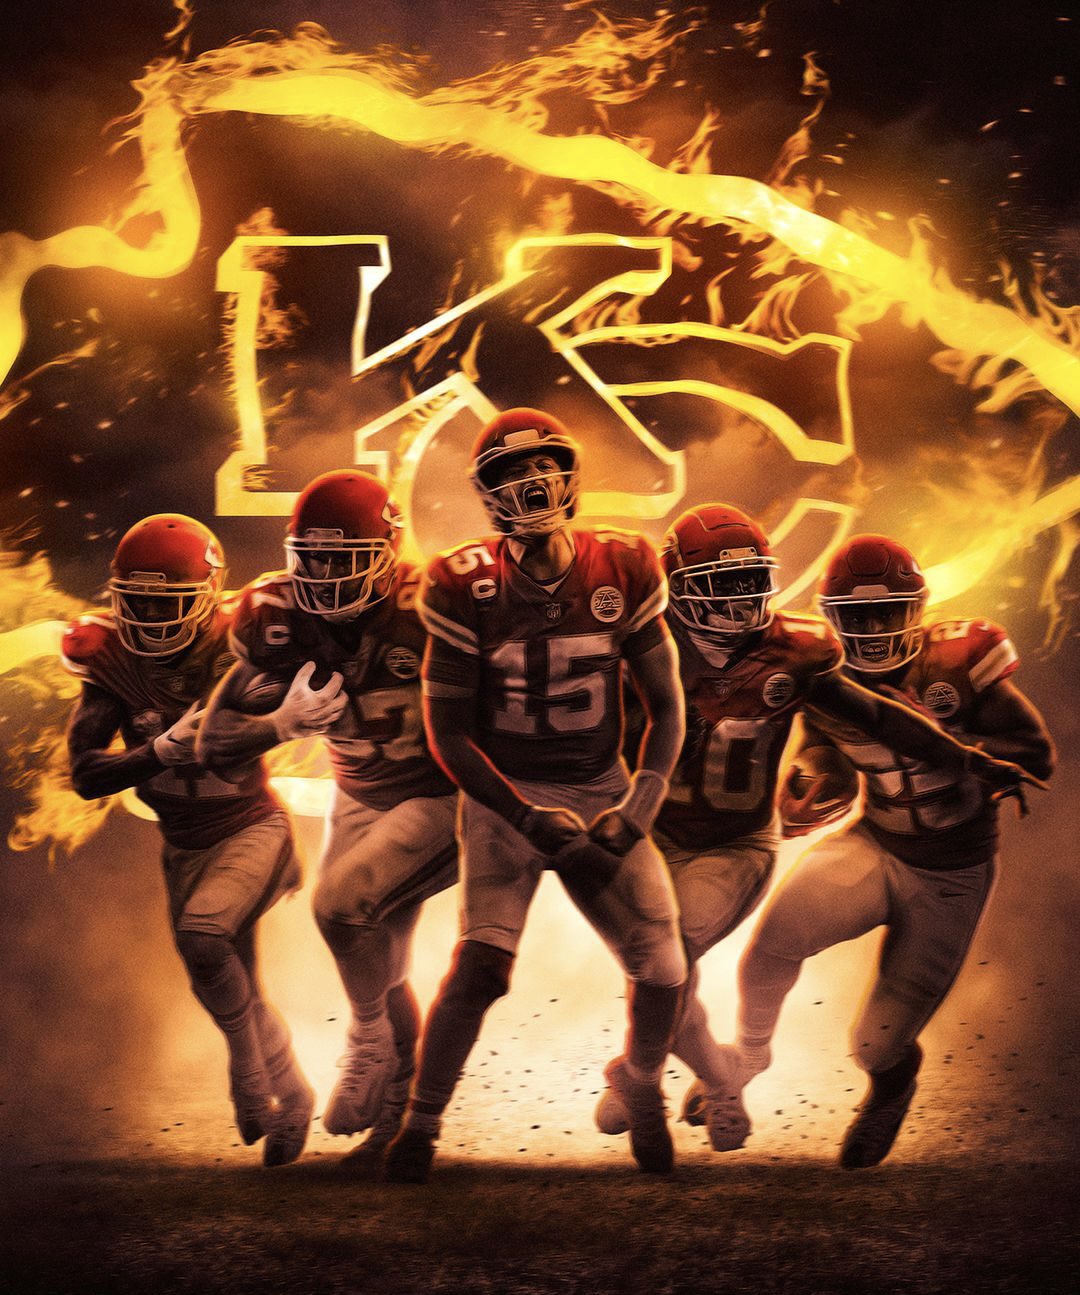 Kansas City Chiefs Super Bowl LVII Champions wallpaper